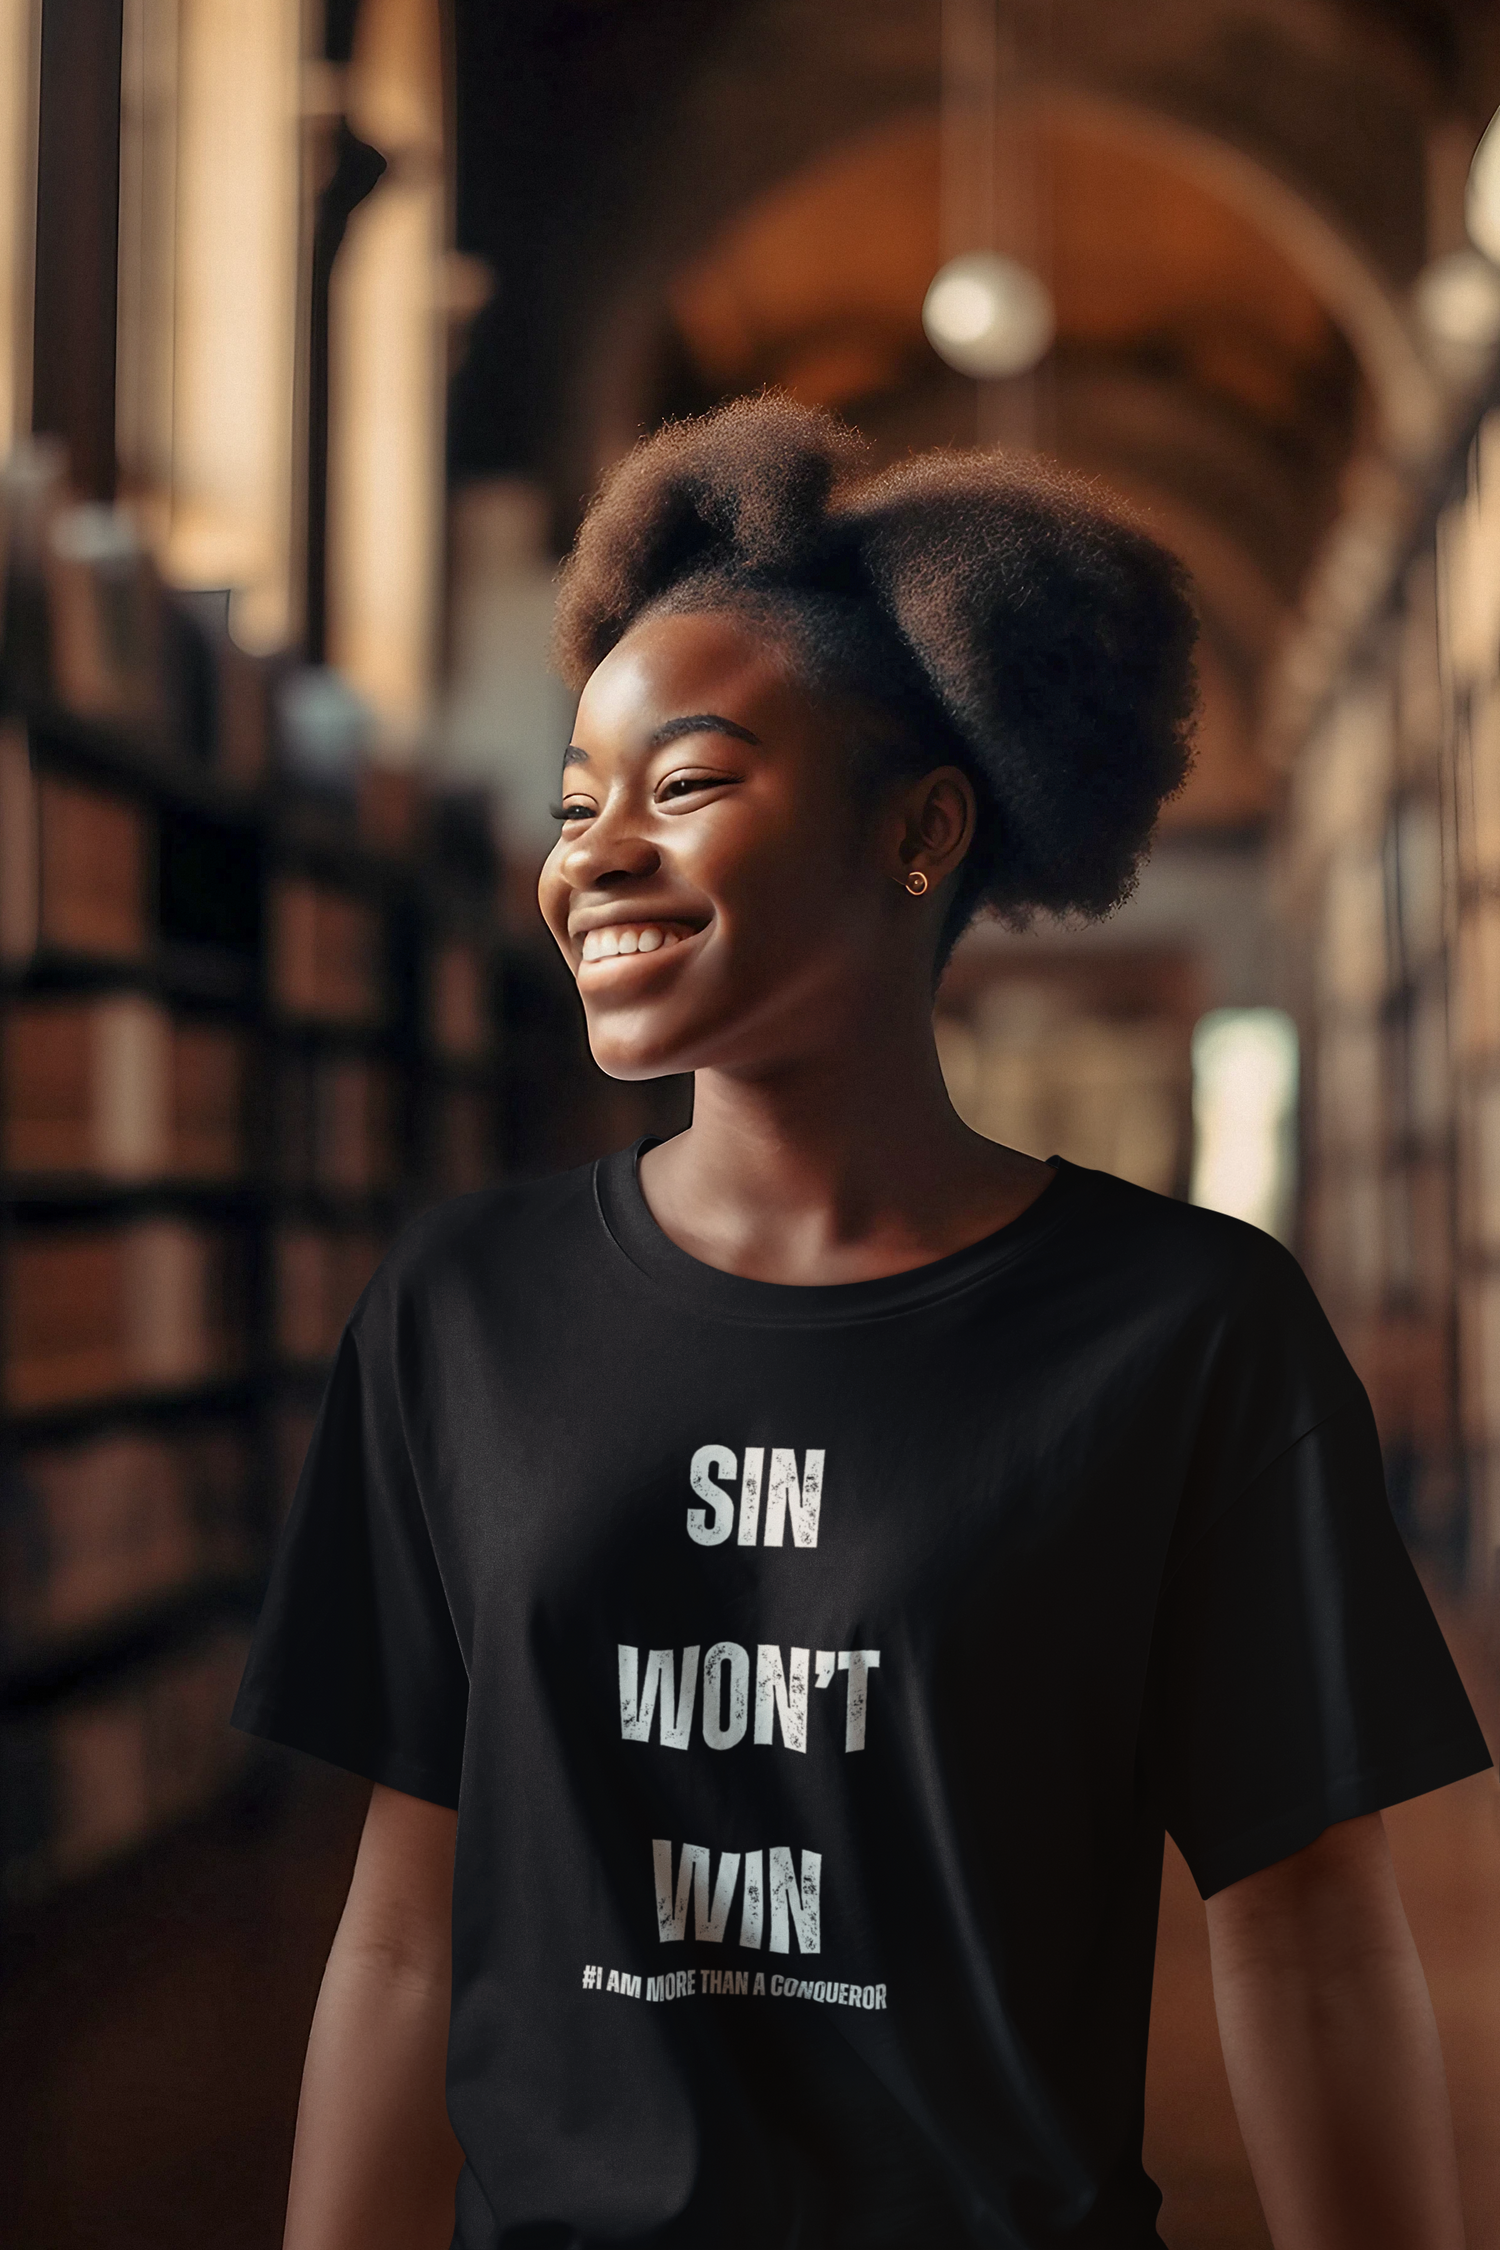 Women's T-Shirt (Sin Won't Win)